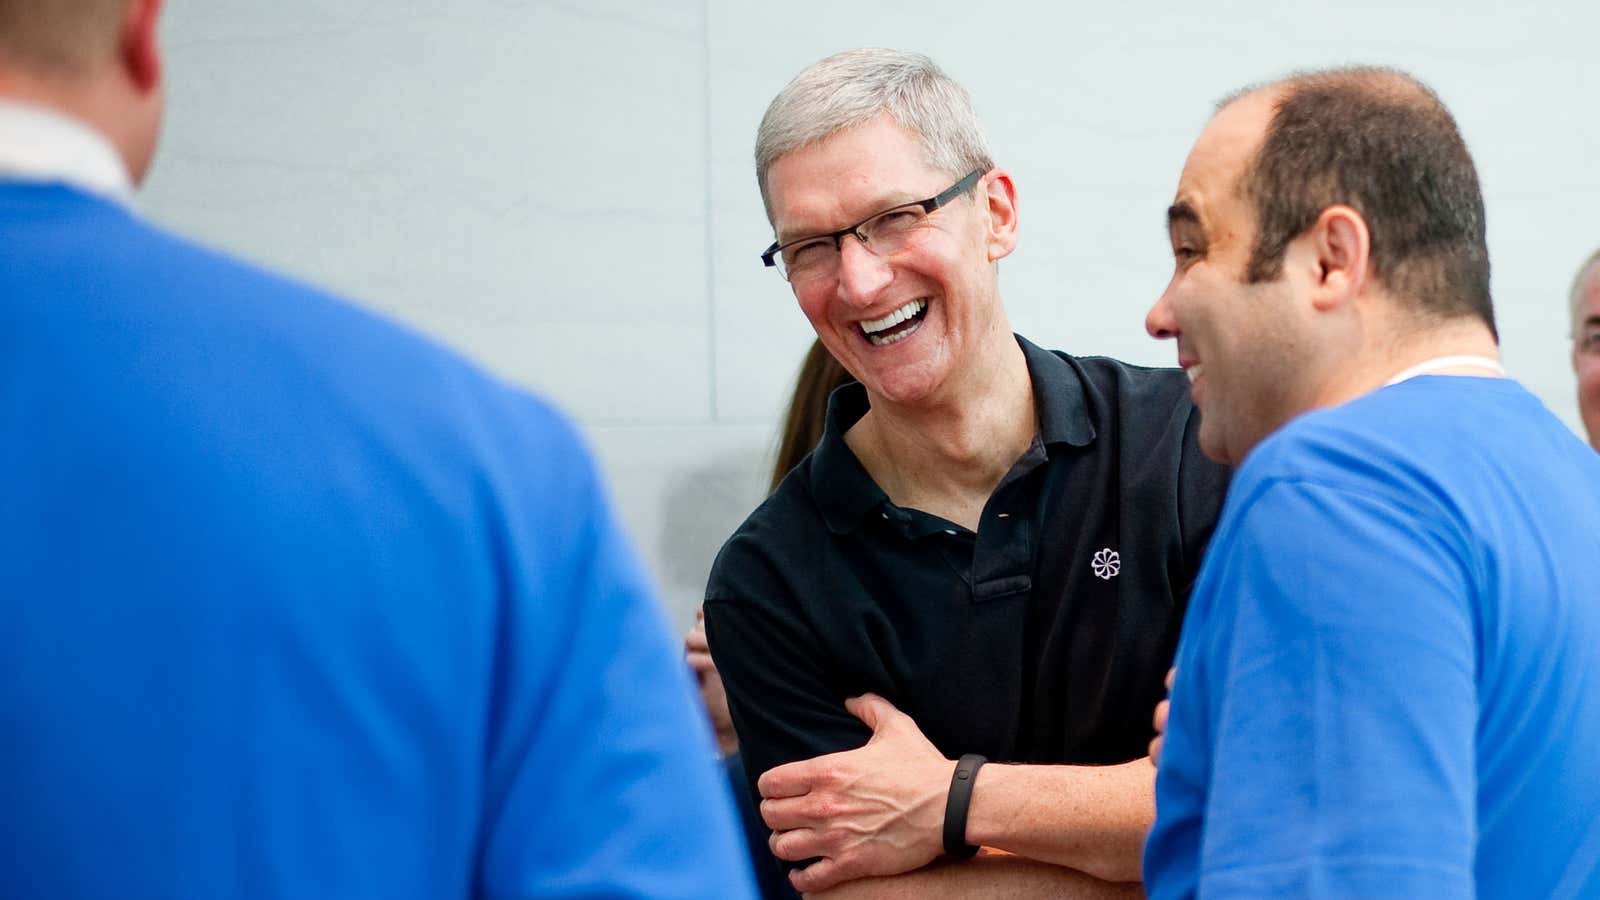 Apple’s CEO is demonstrating values-based leadership.